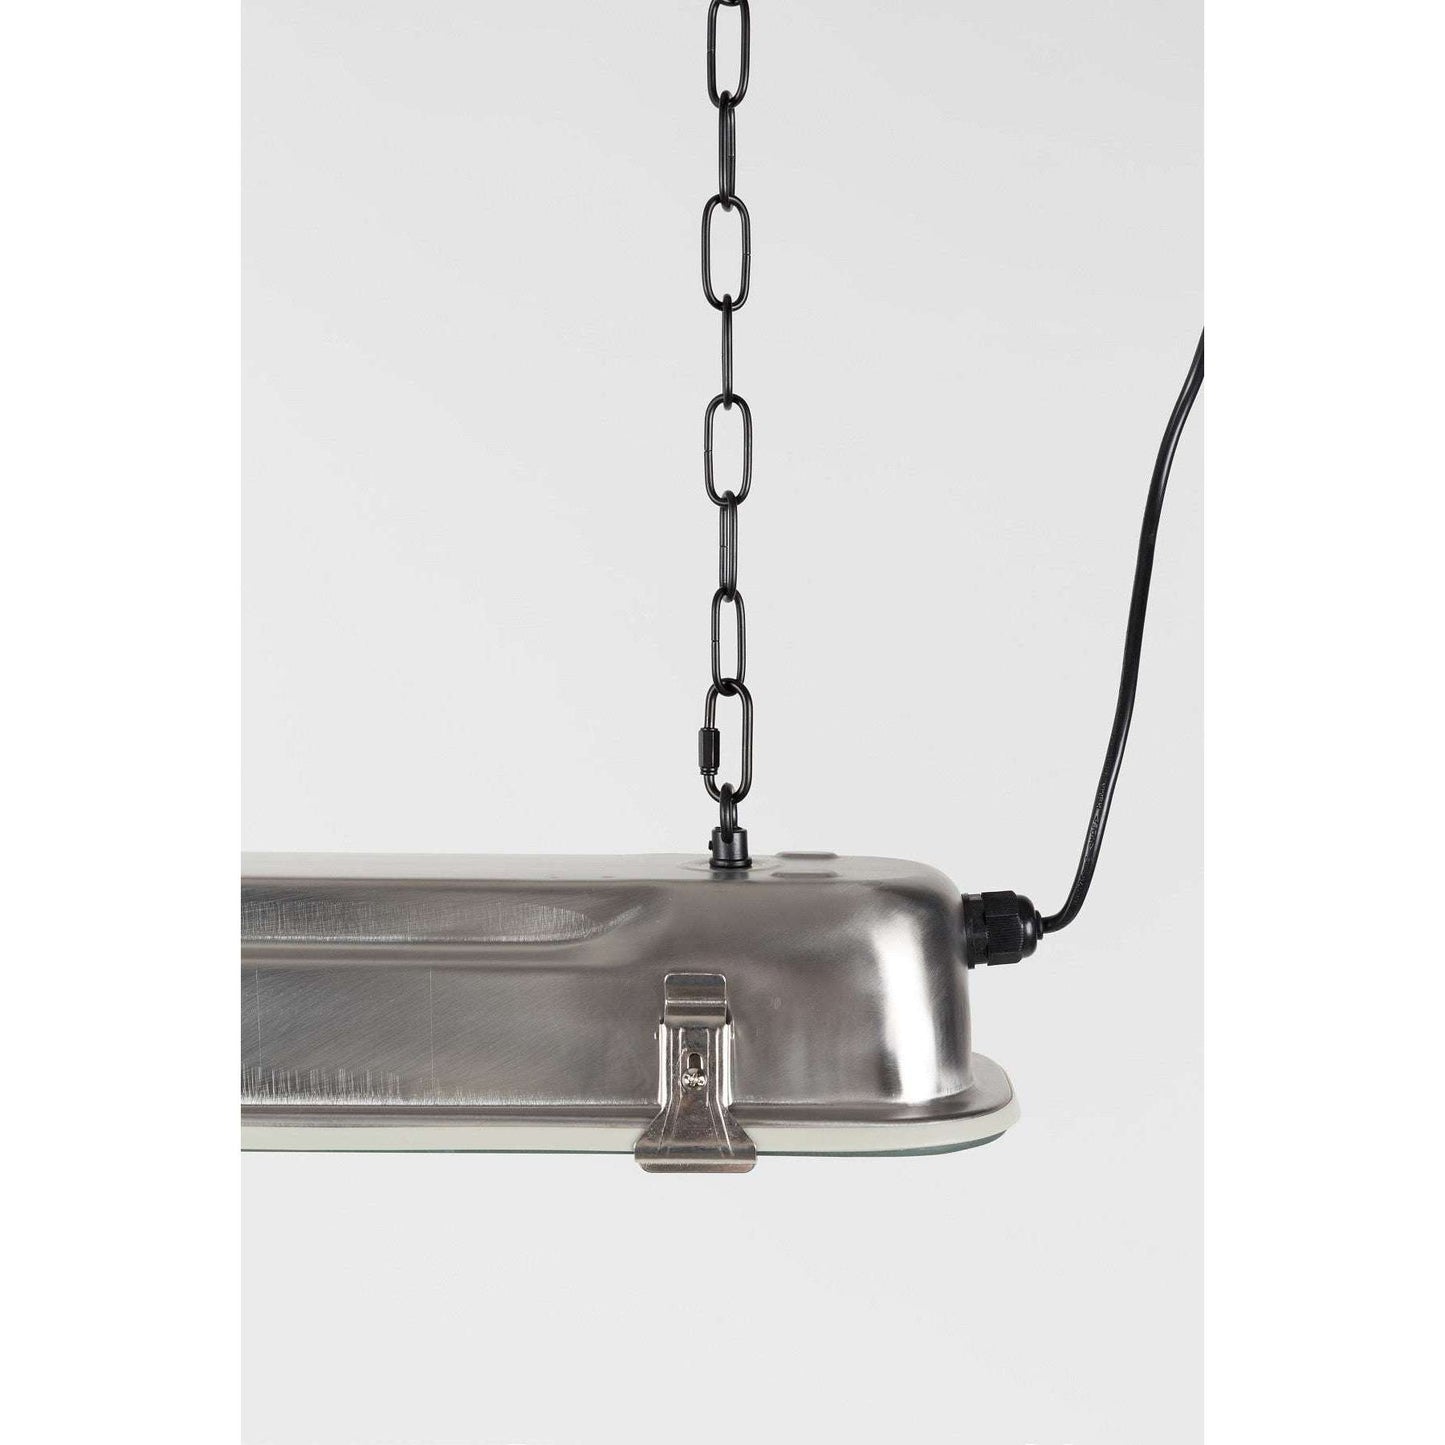 Zuiver hanglamp g.t.a. xl nickel 130 x 14 x 190 cm